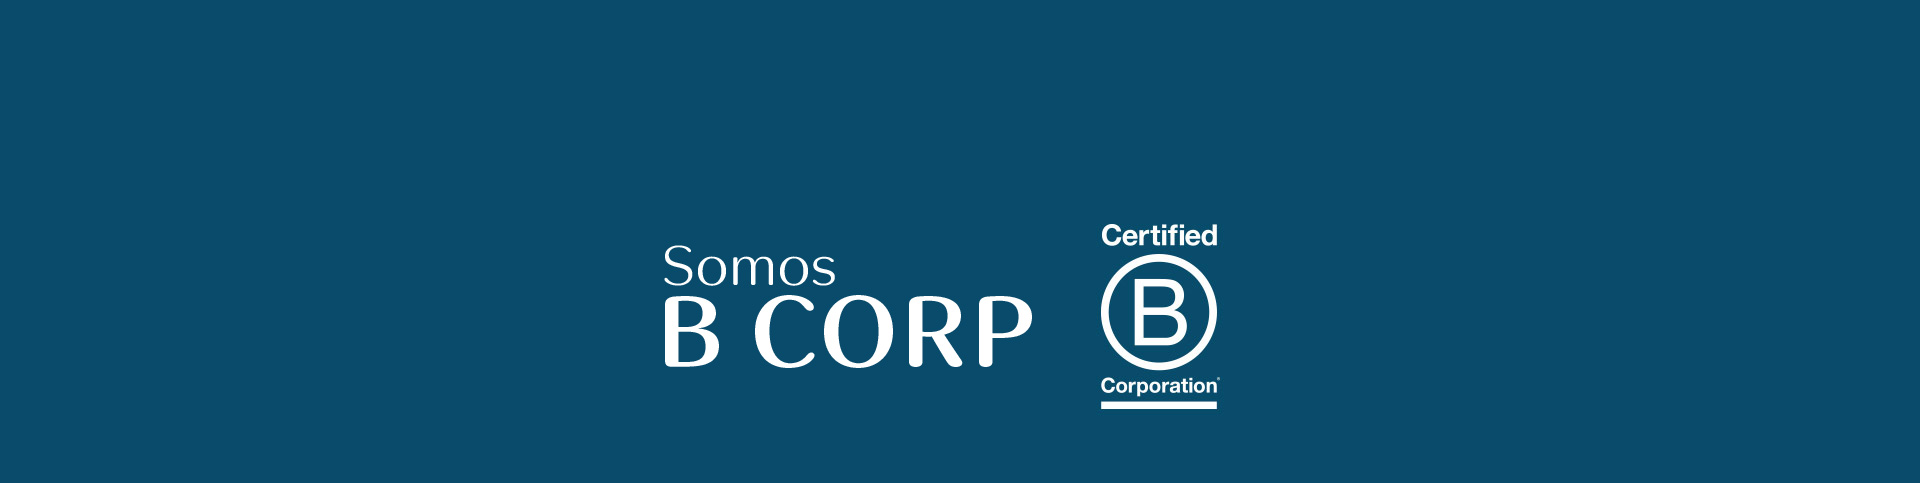 Isologotipo del certificado B Corp